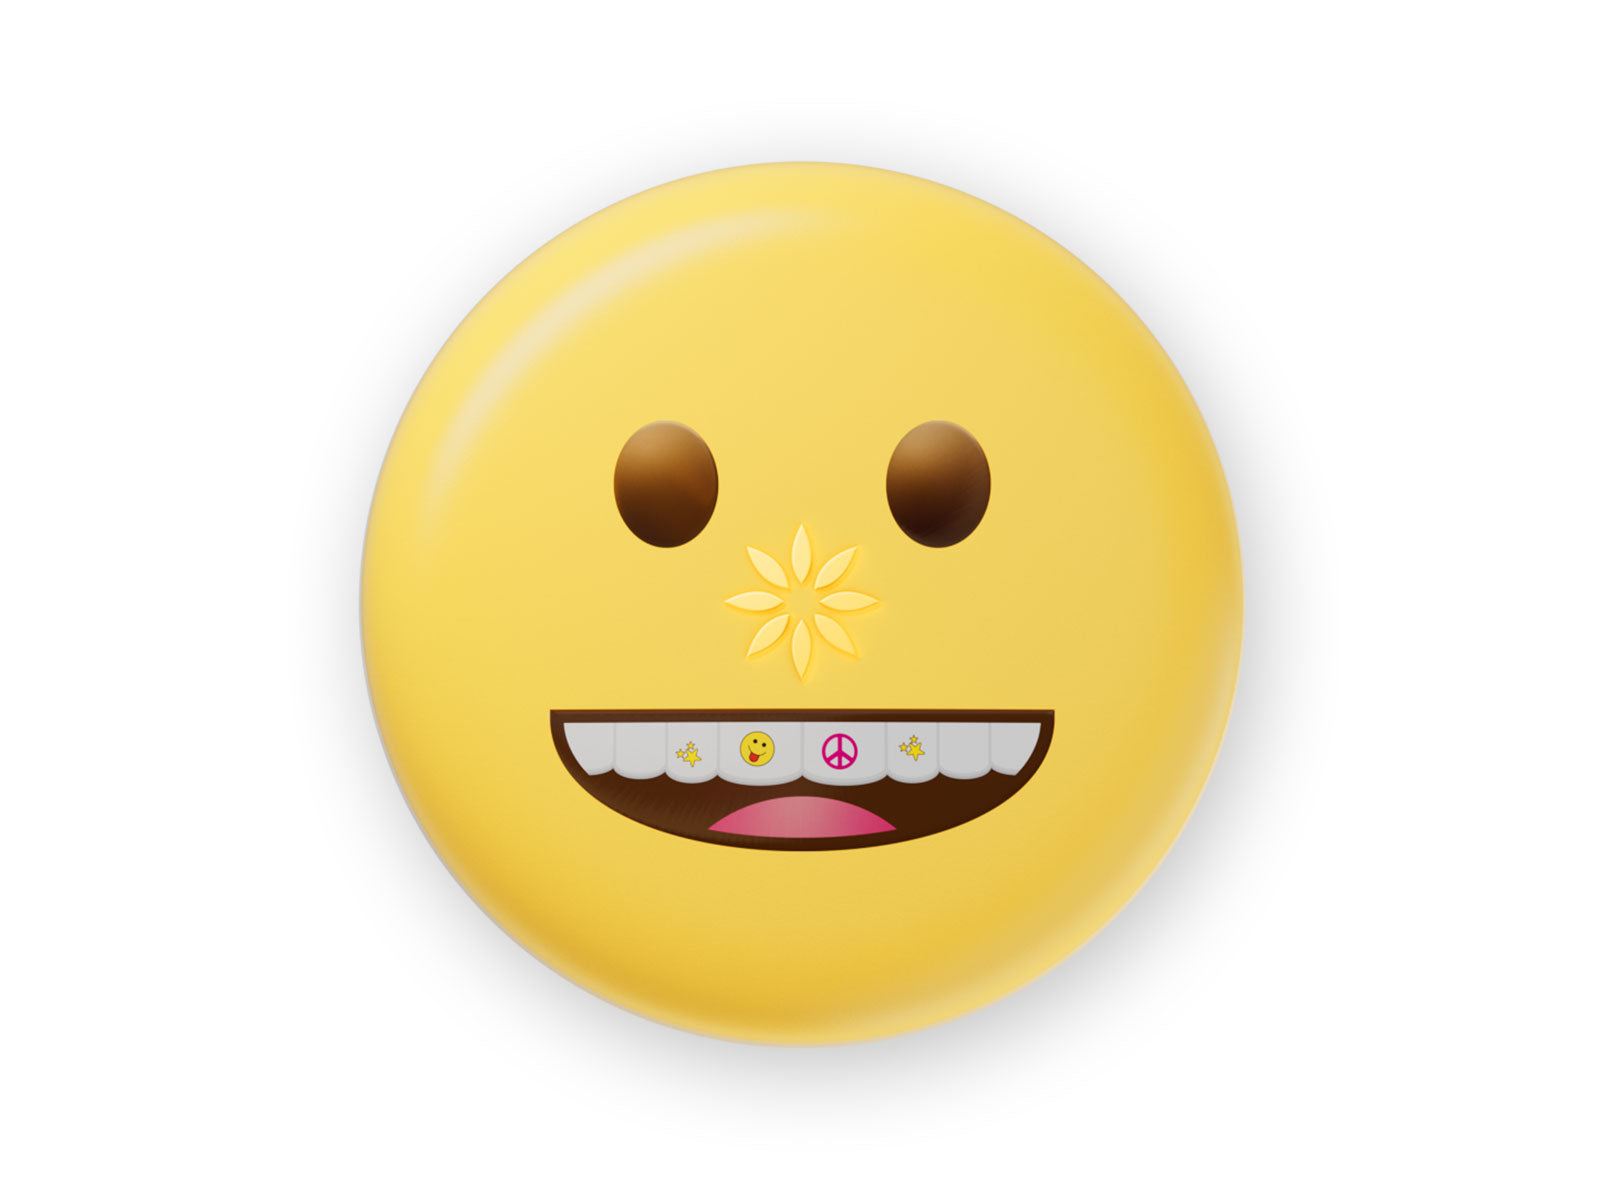 emoji icons on stick